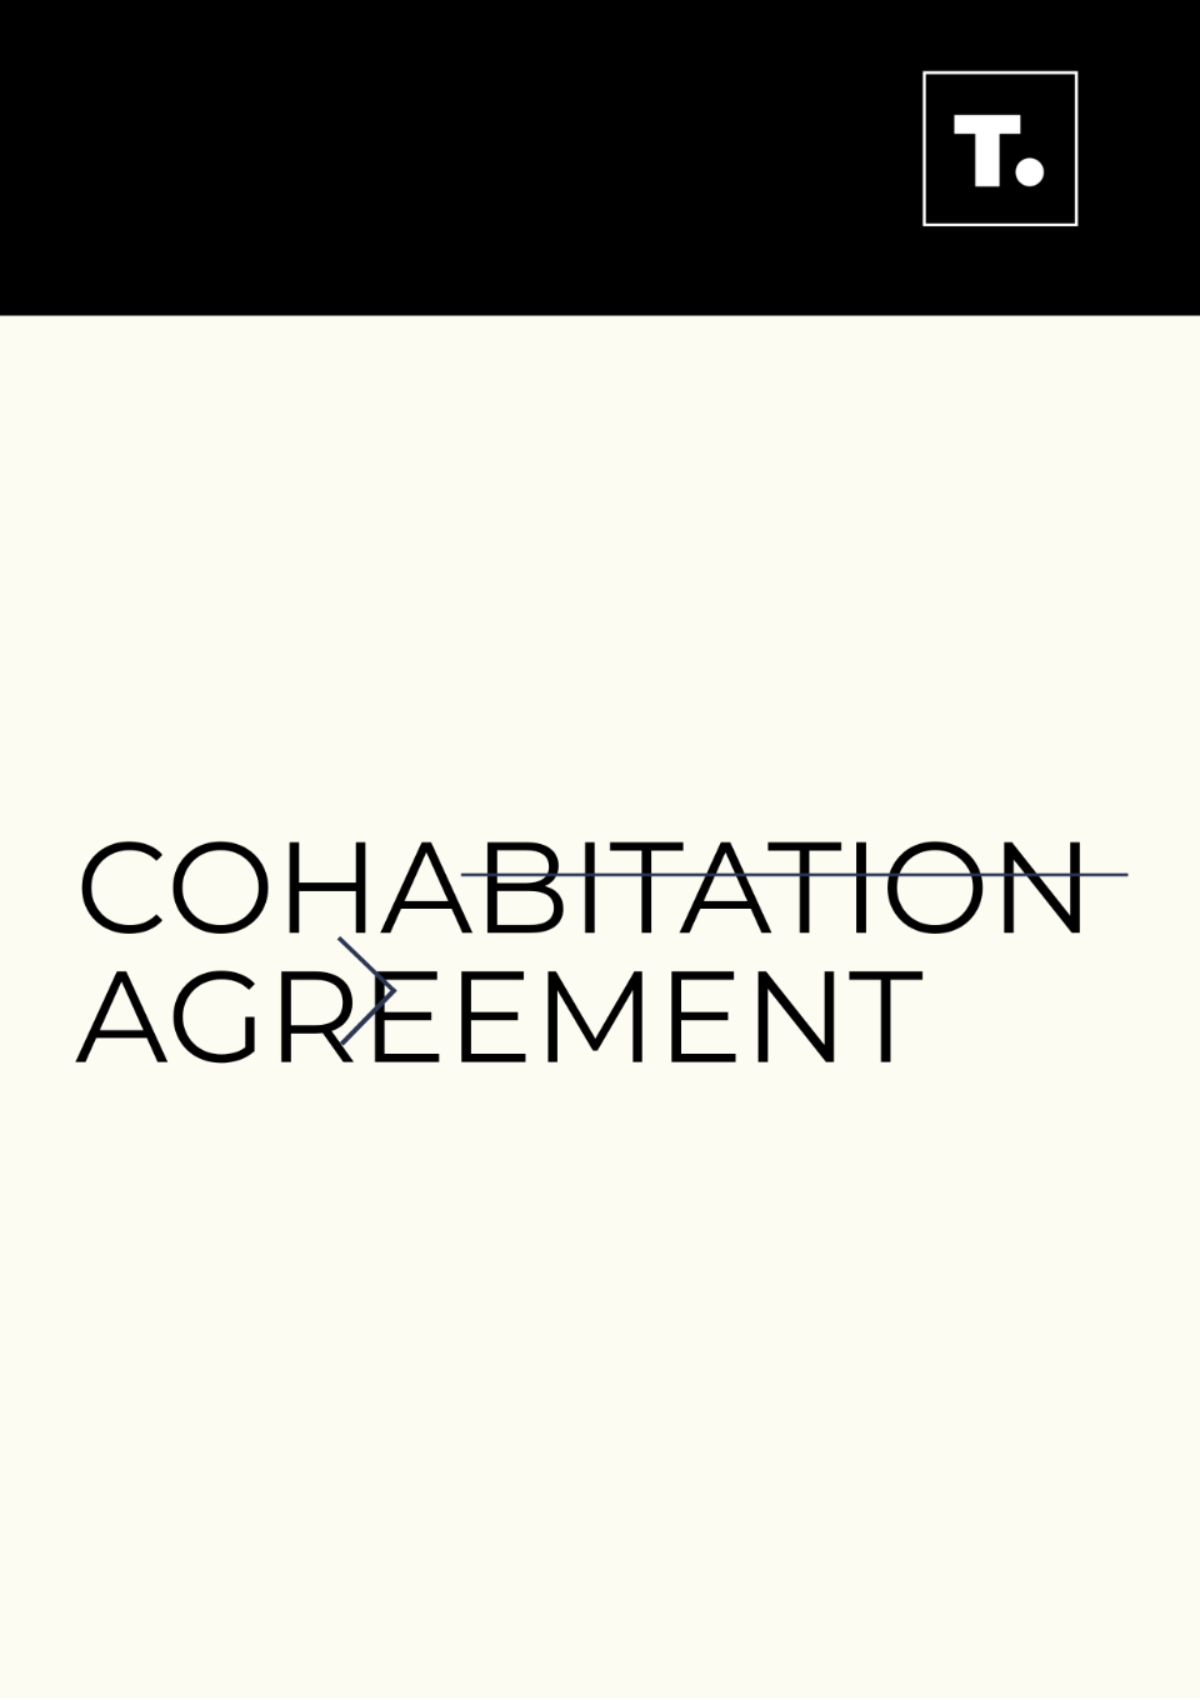 Cohabitation Agreement Template